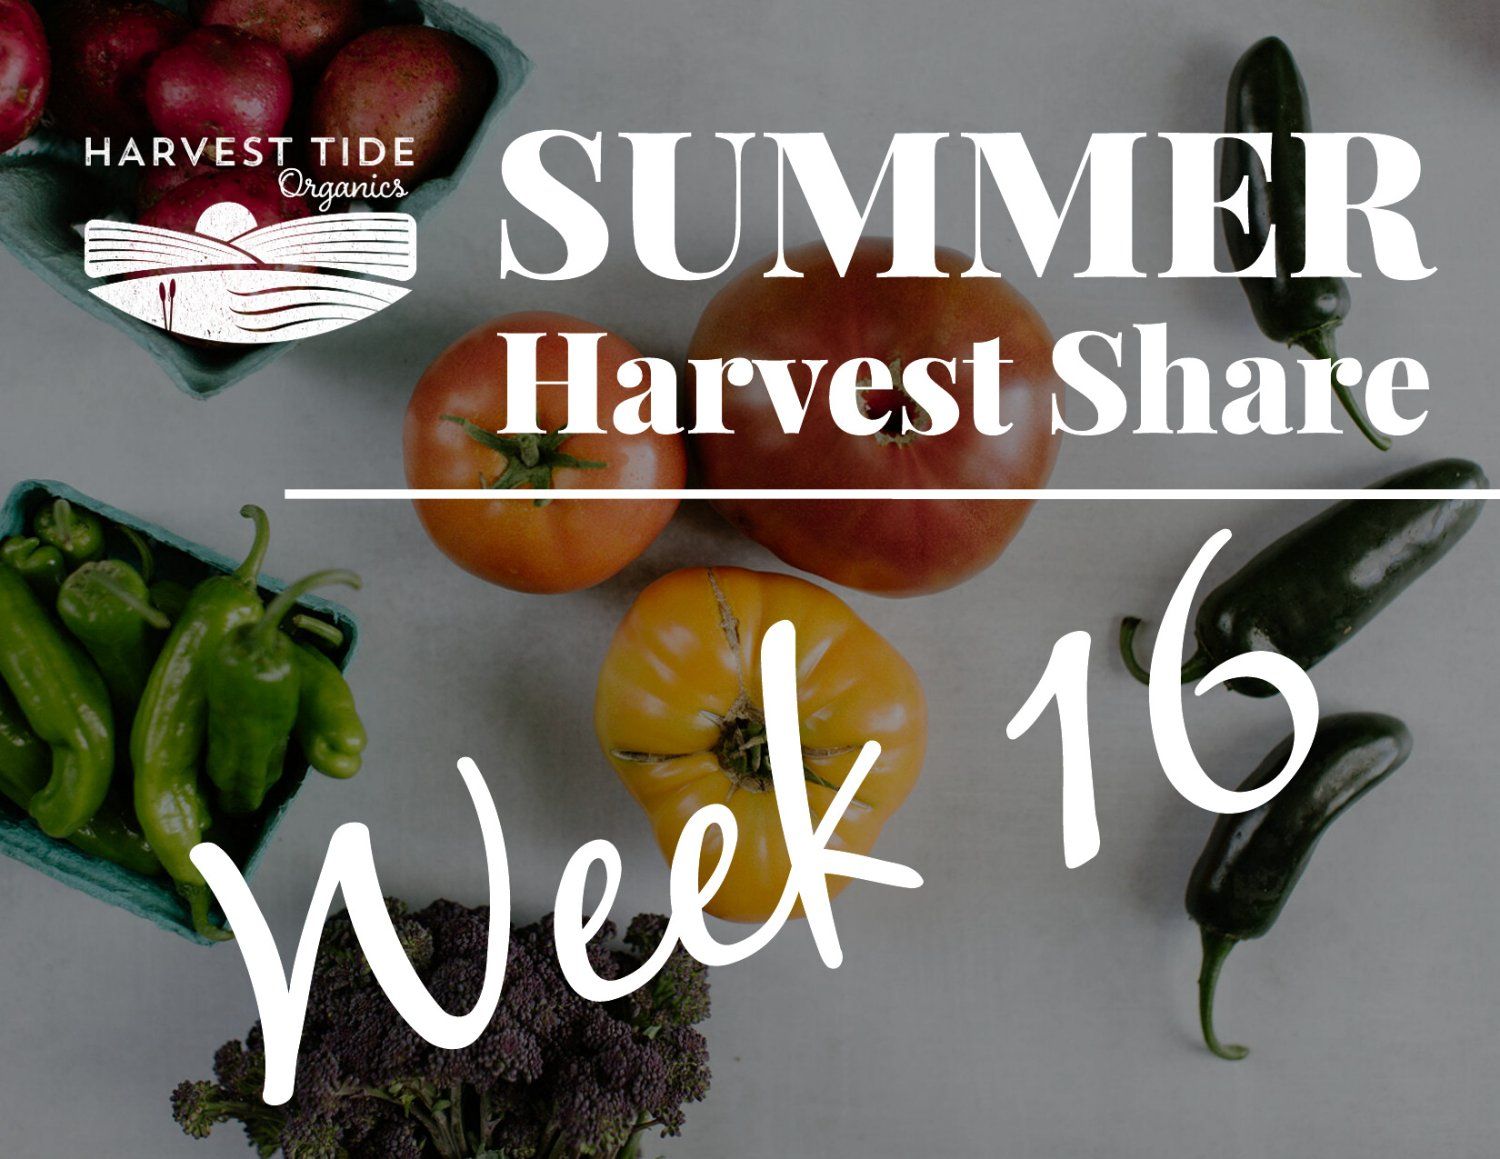 Summer Harvest Share - Week 16